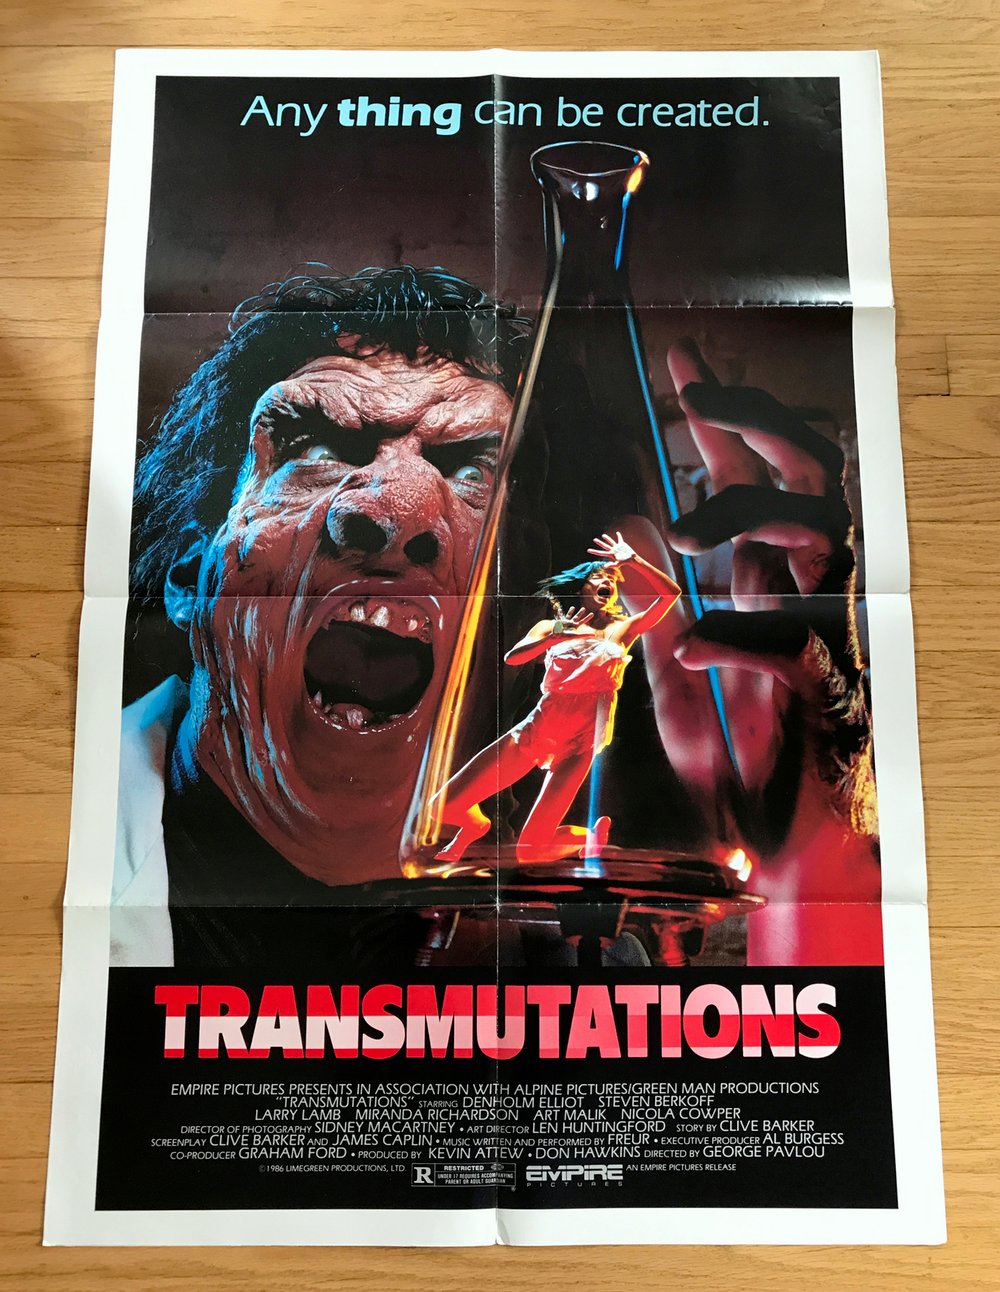 1986 TRANSMUTATIONS Original U.S. One Sheet Movie Poster